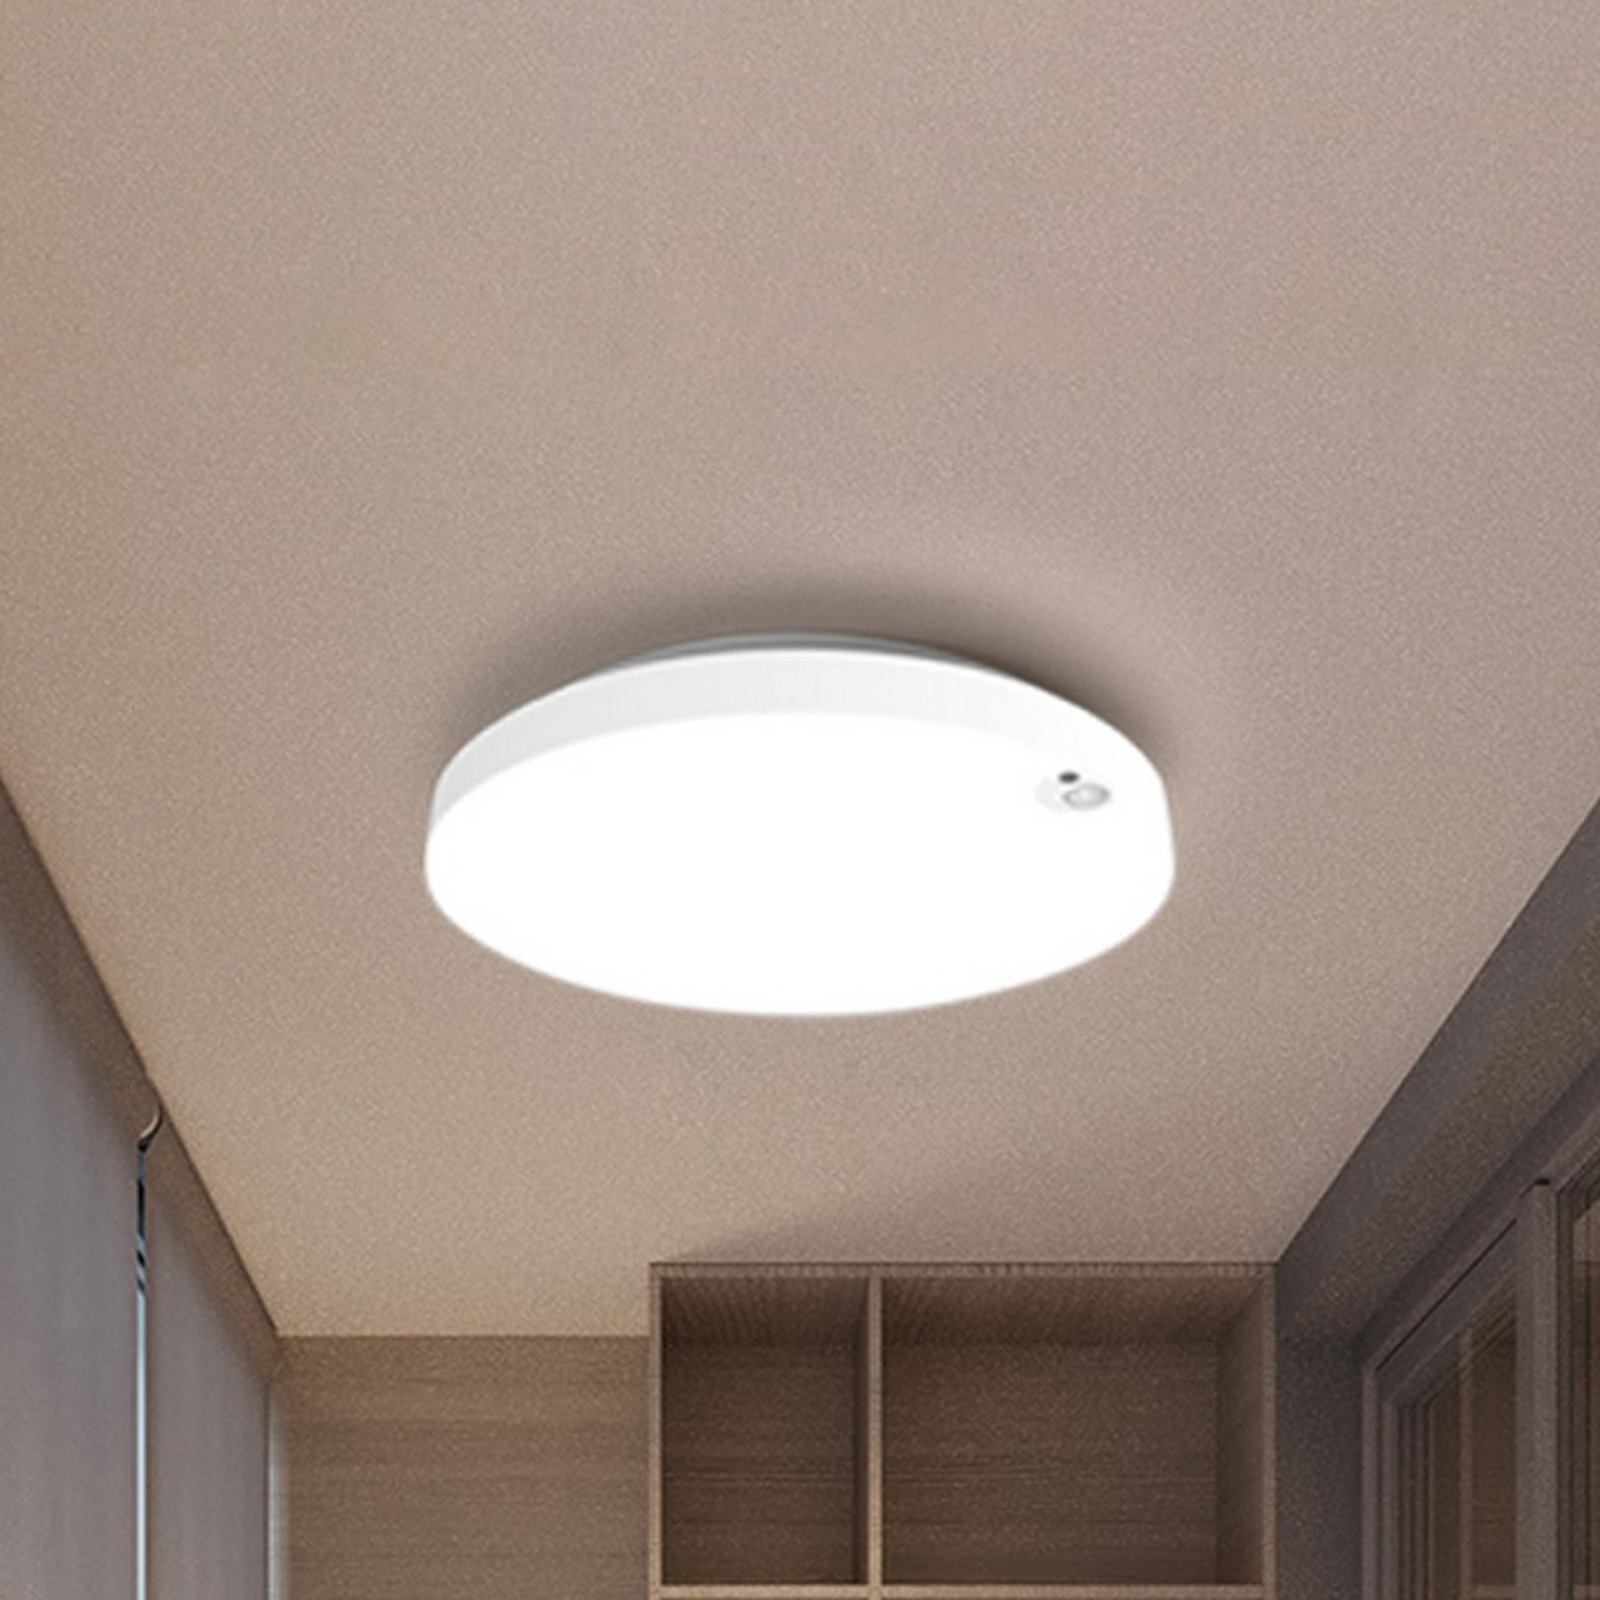 LED-Deckenlampe Allrounder 1, Lichtfarbe einstellbar, Sensor